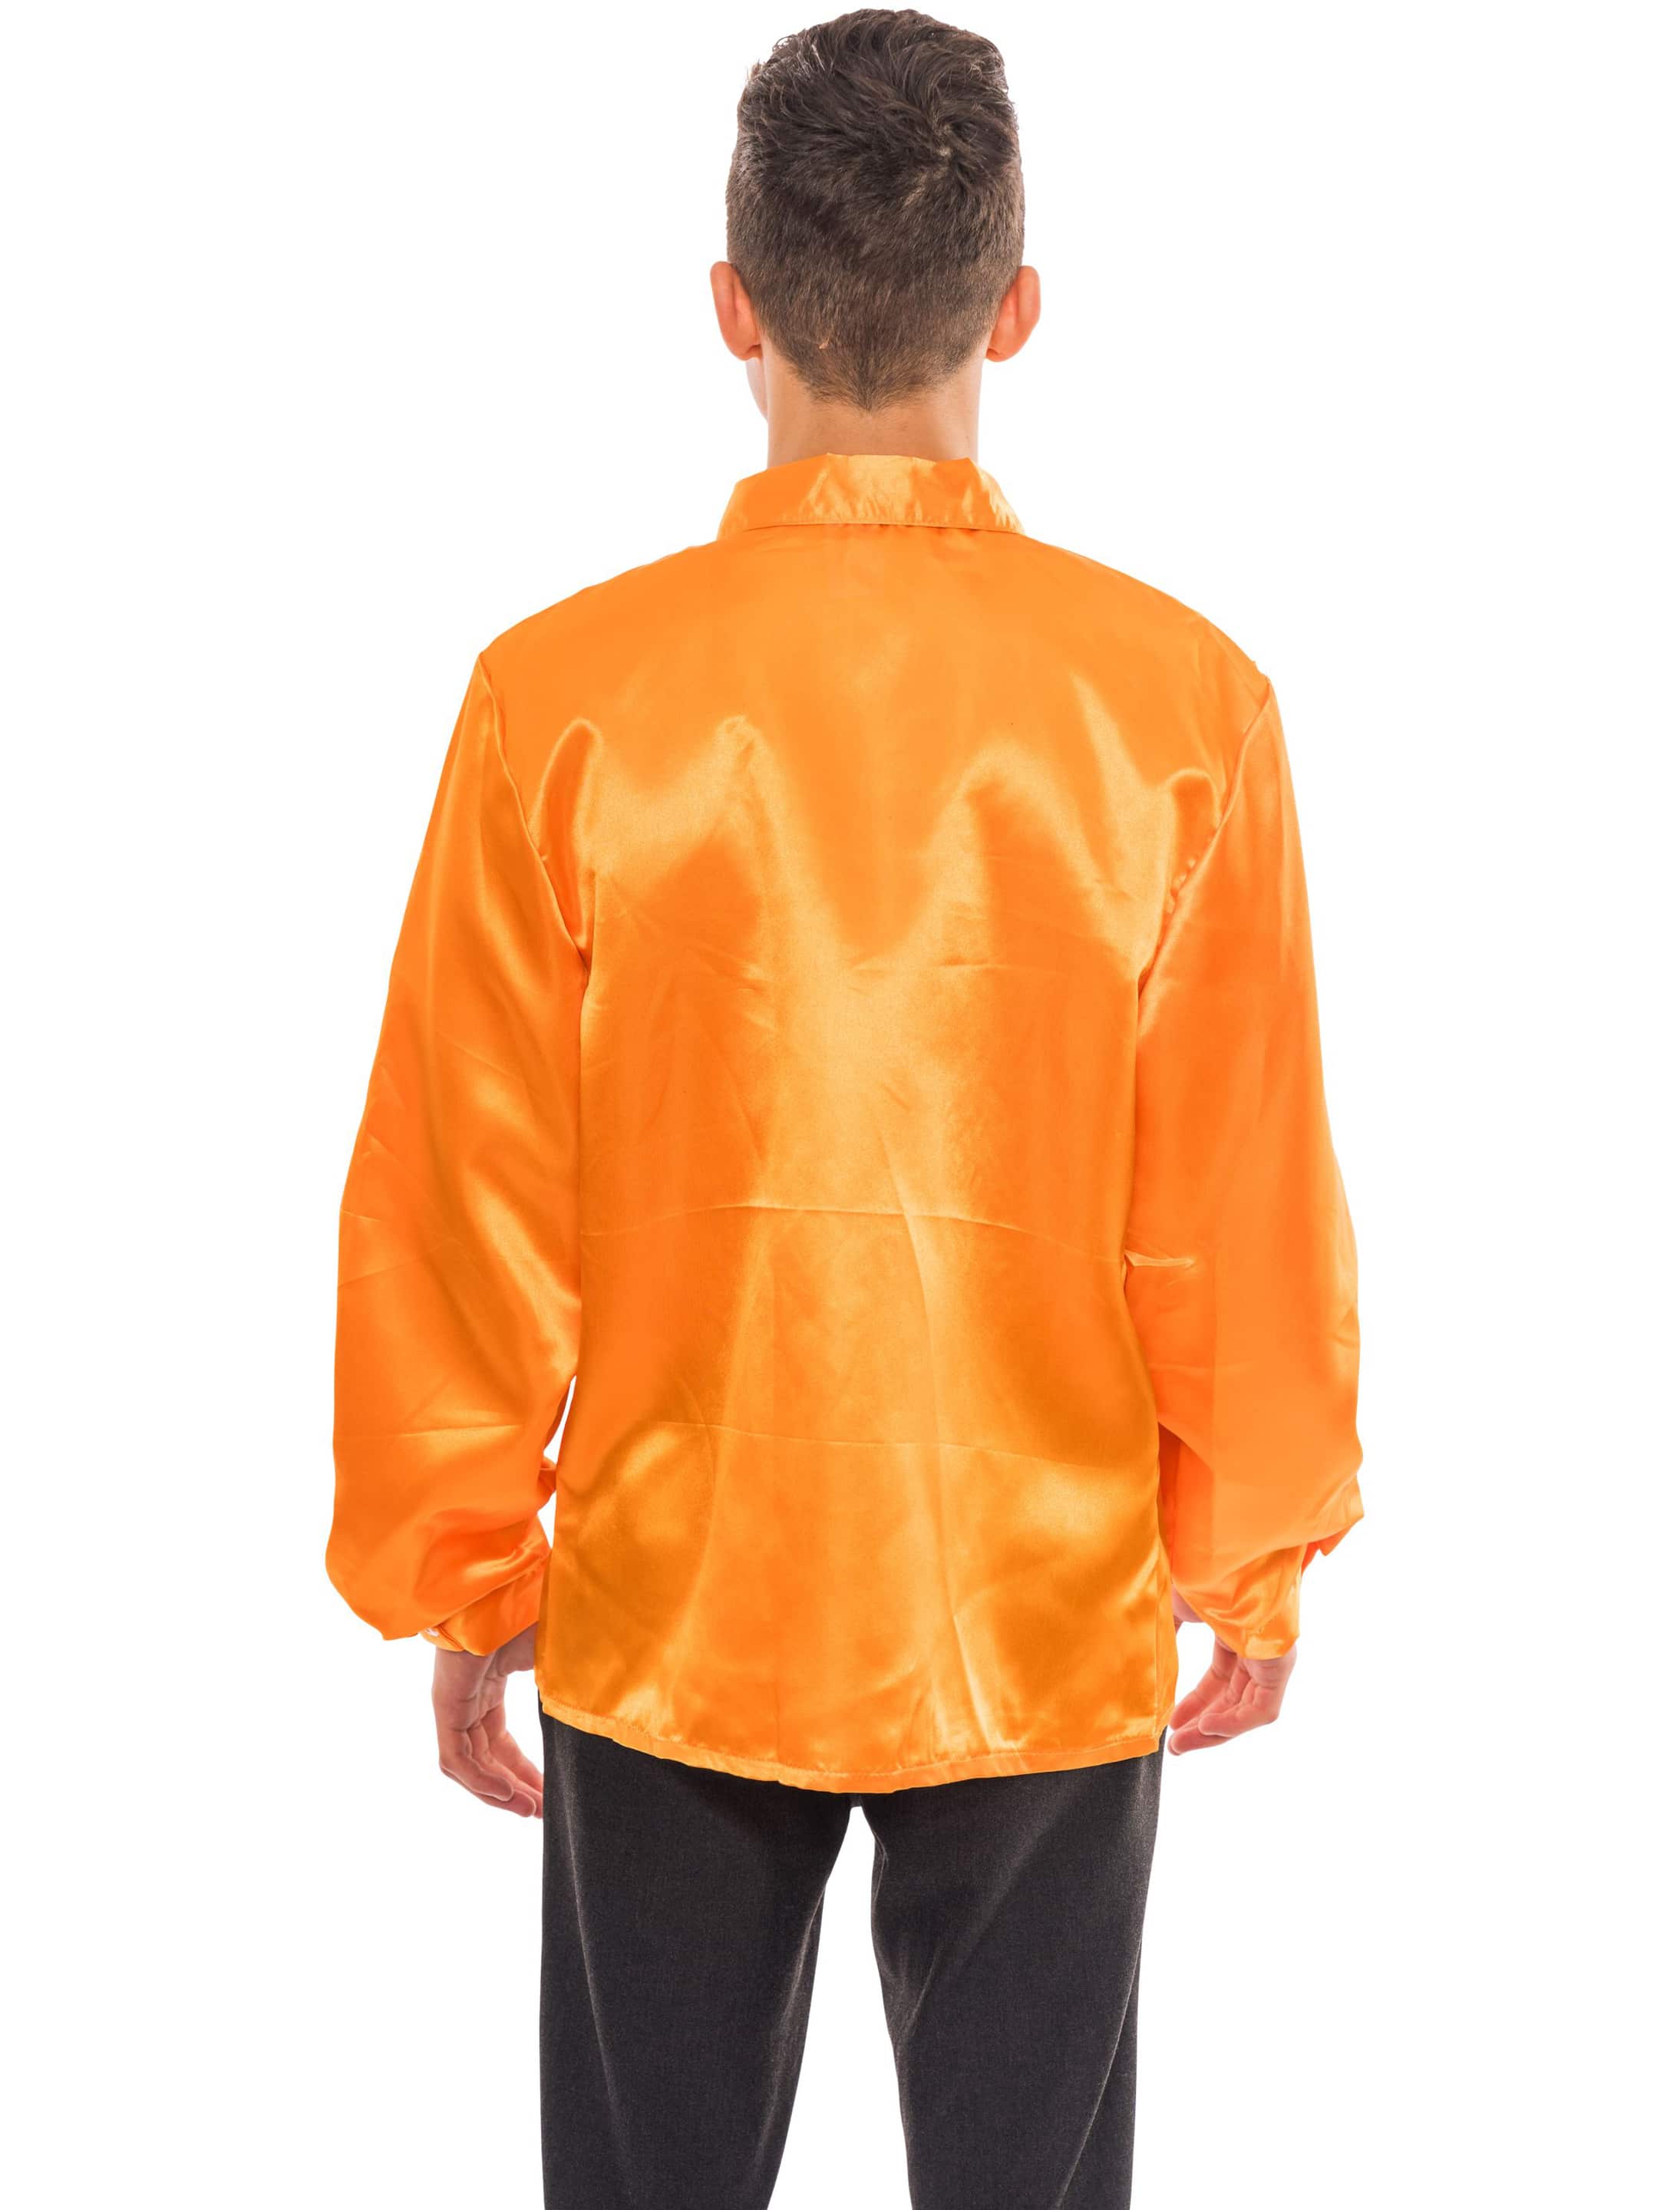 Discohemd Herren orange XL